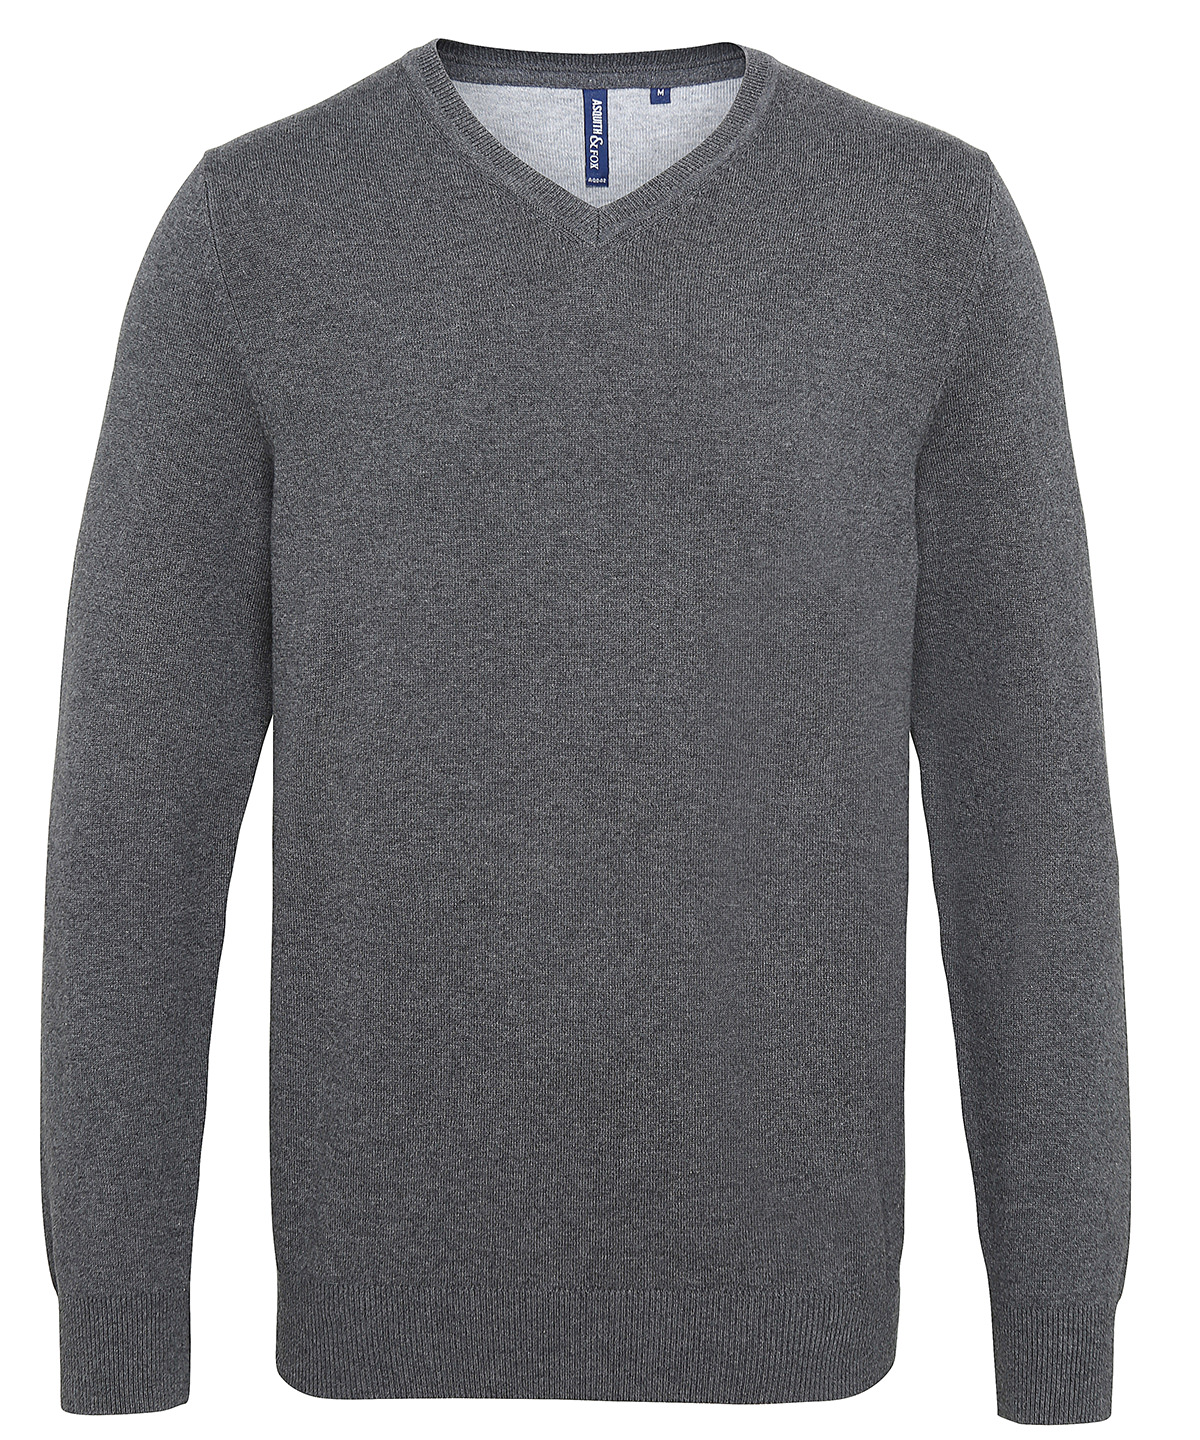 Mens Cotton Blend V-Neck Sweater Charcoal Size 2XLarge